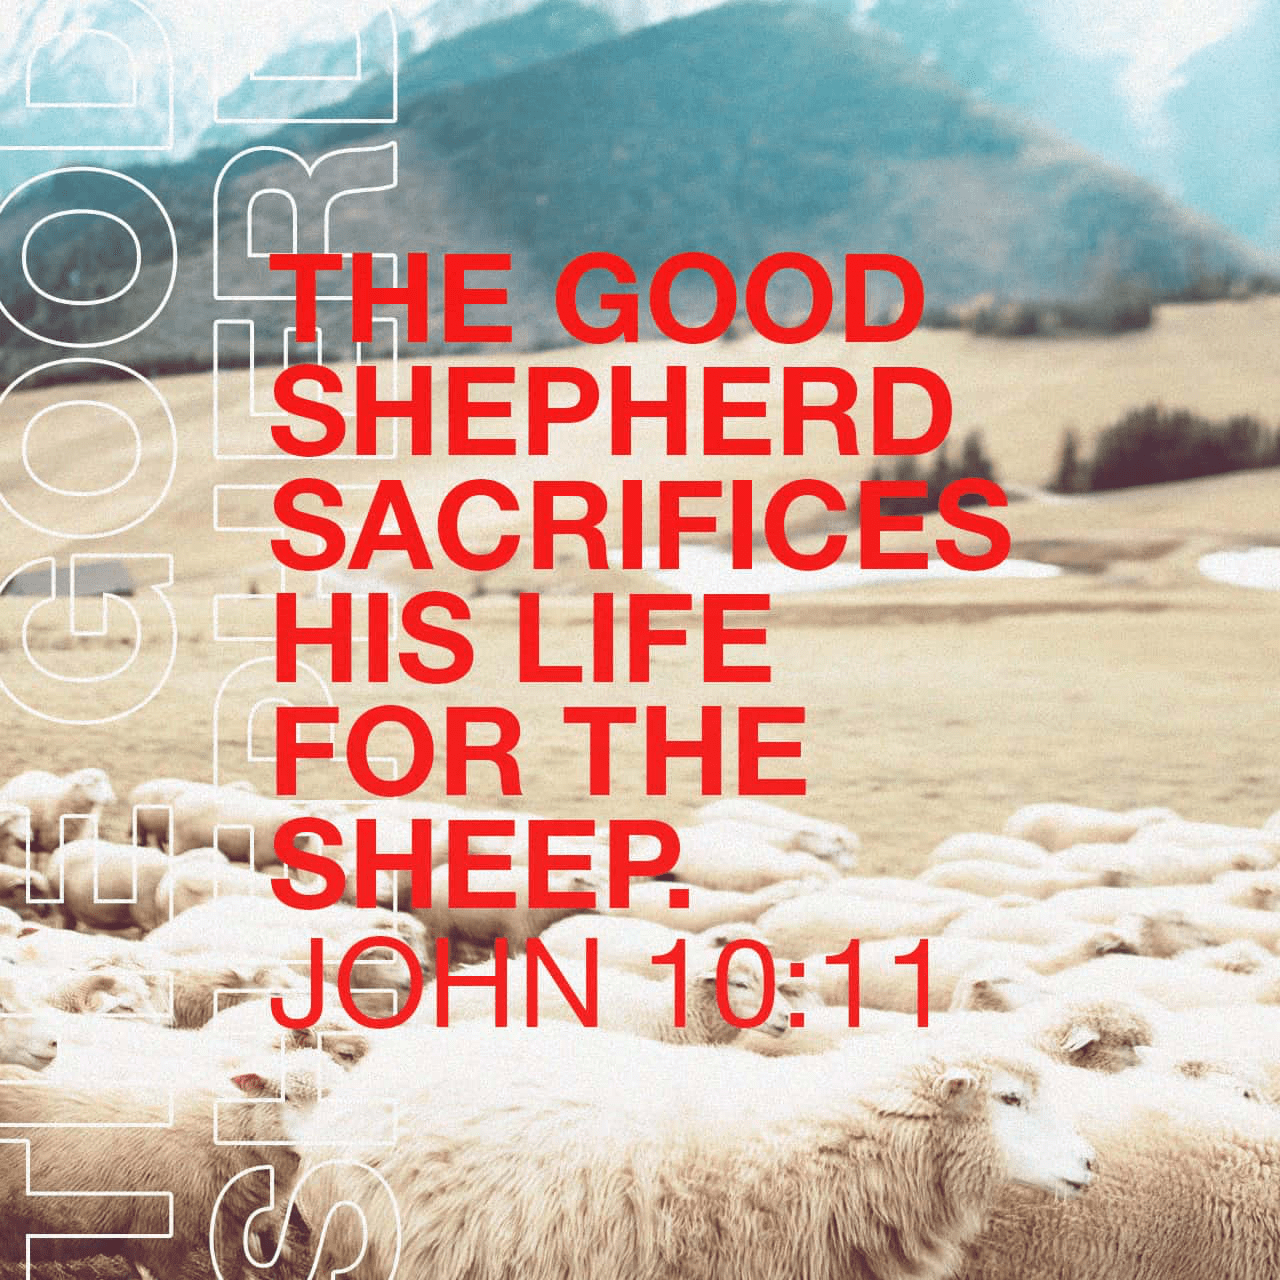 VOTD April 29 - “I am the good shepherd; the good shepherd lays down His life for the sheep.” ‭‭John‬ ‭10:11‬ ‭NASB‬‬